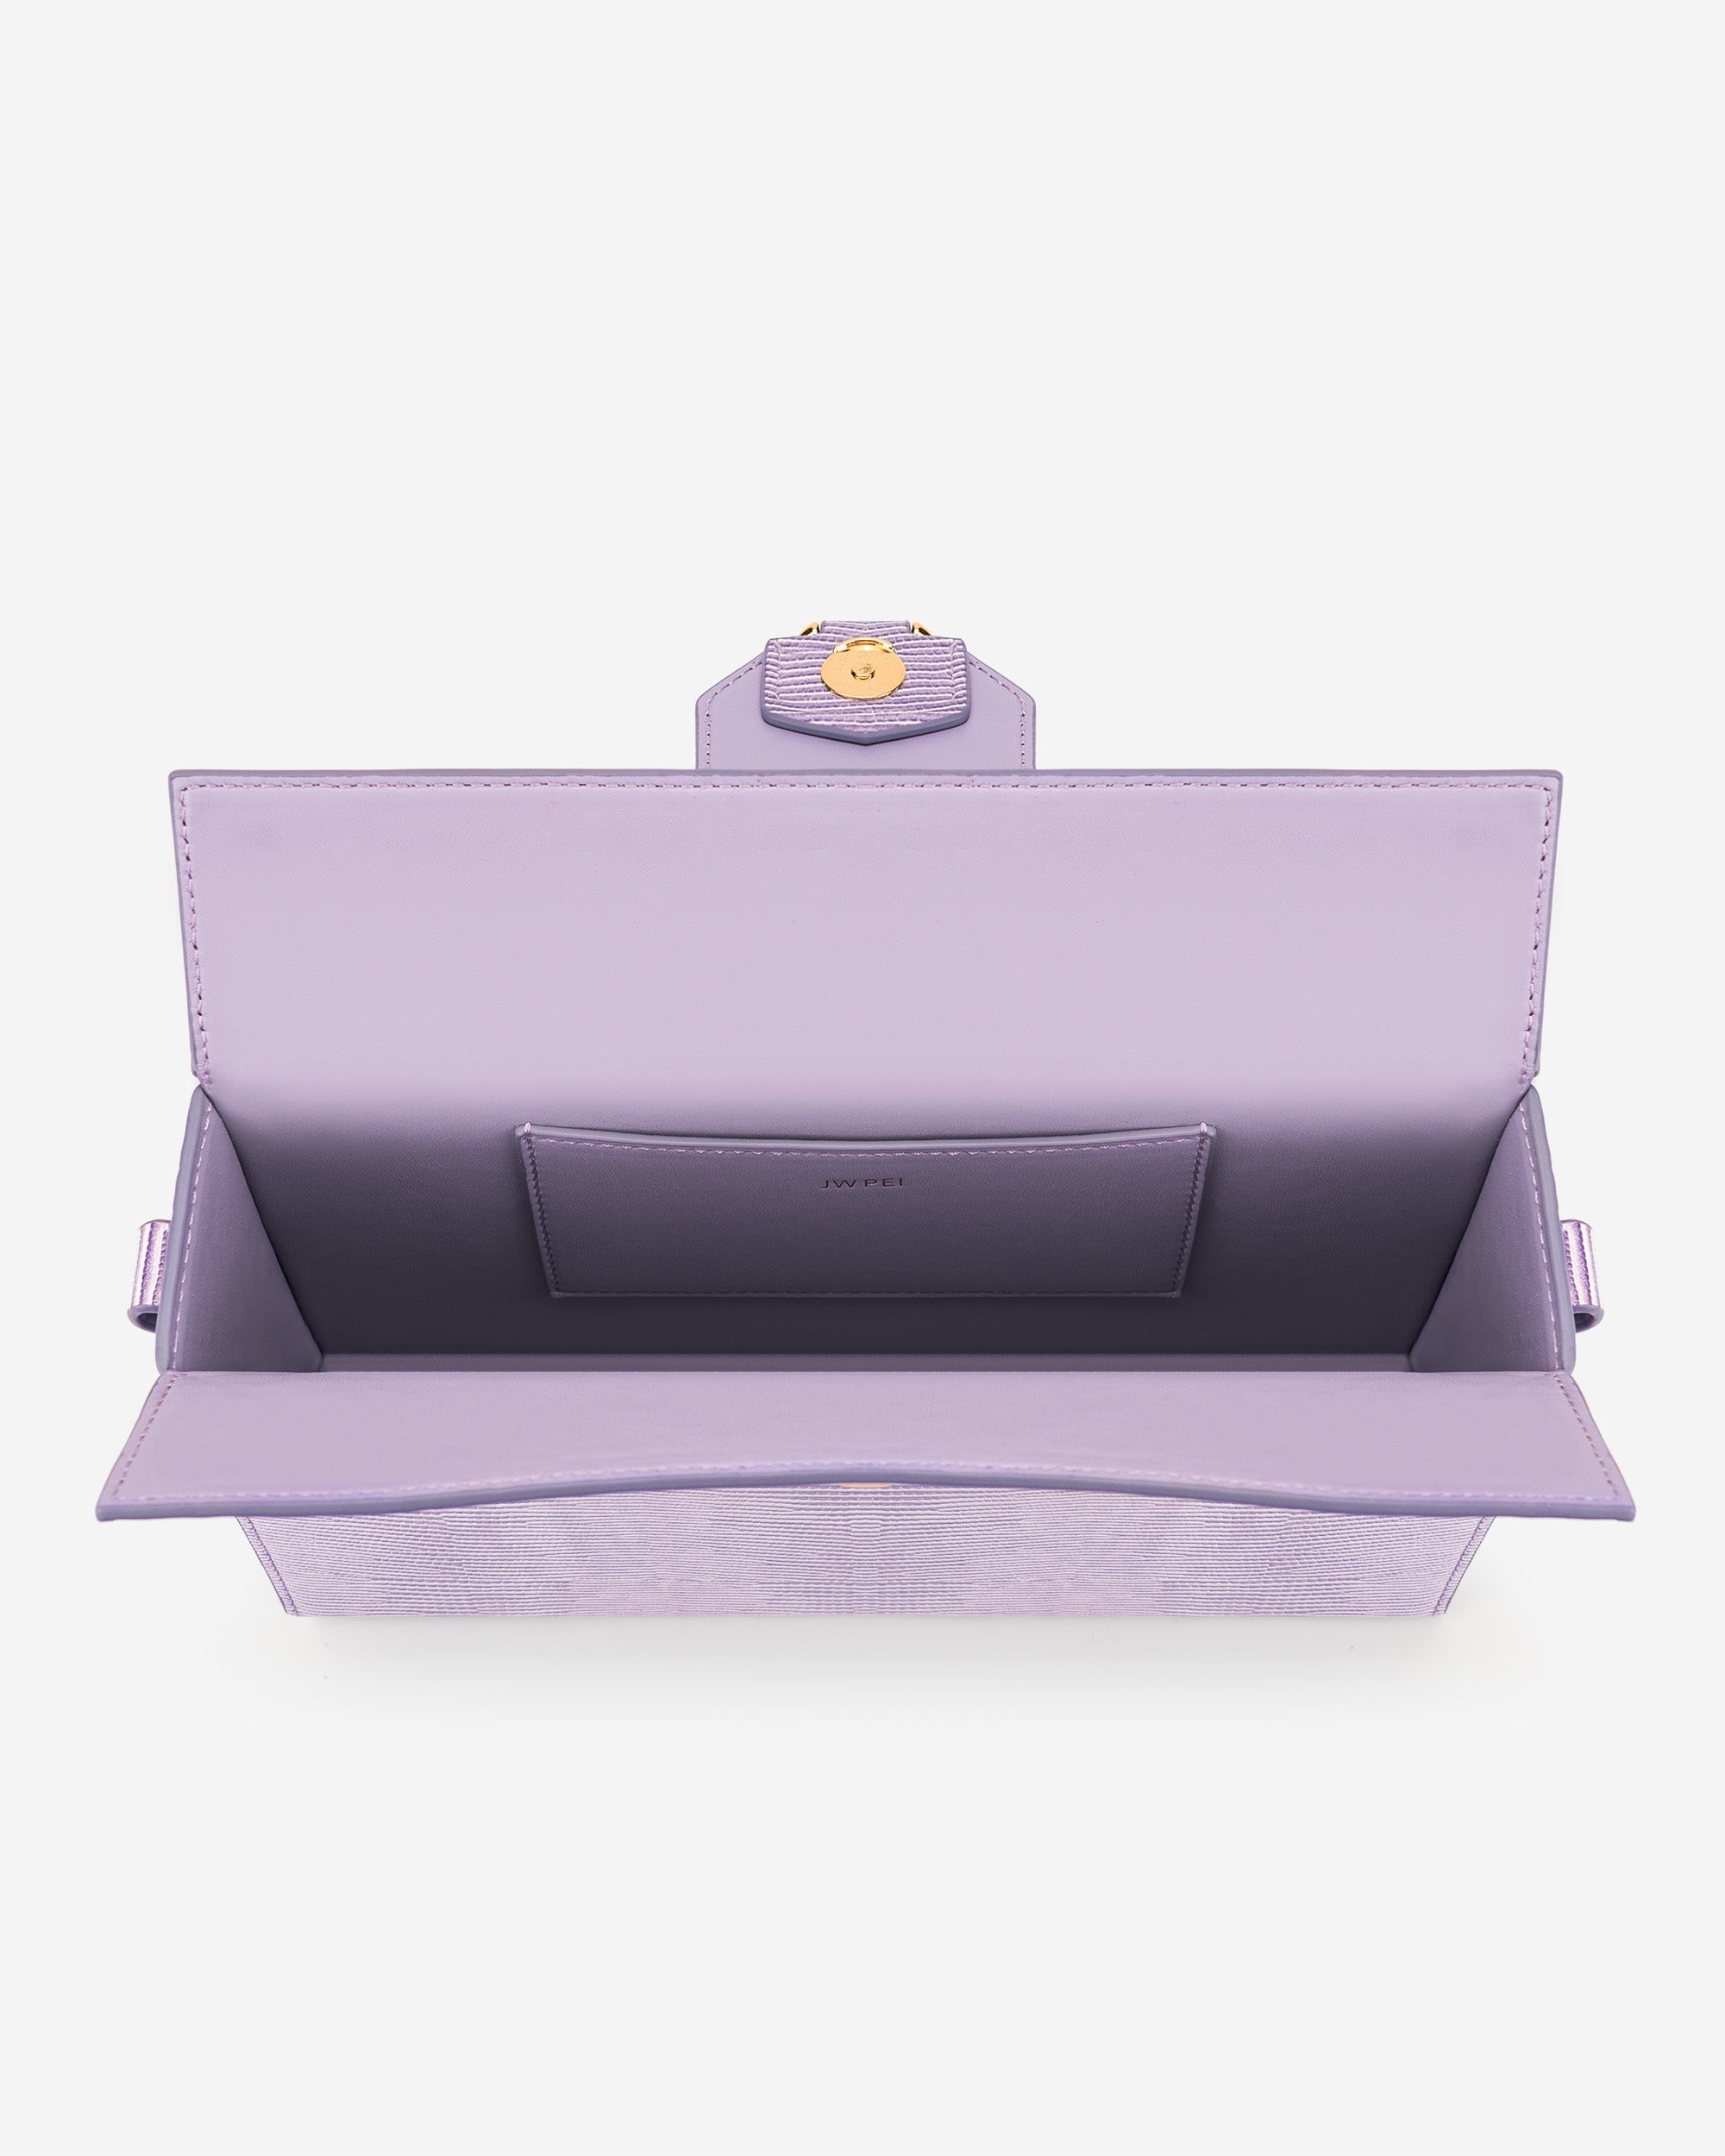 Grace 盒子斜挎包 - 紫色蜥蜴紋